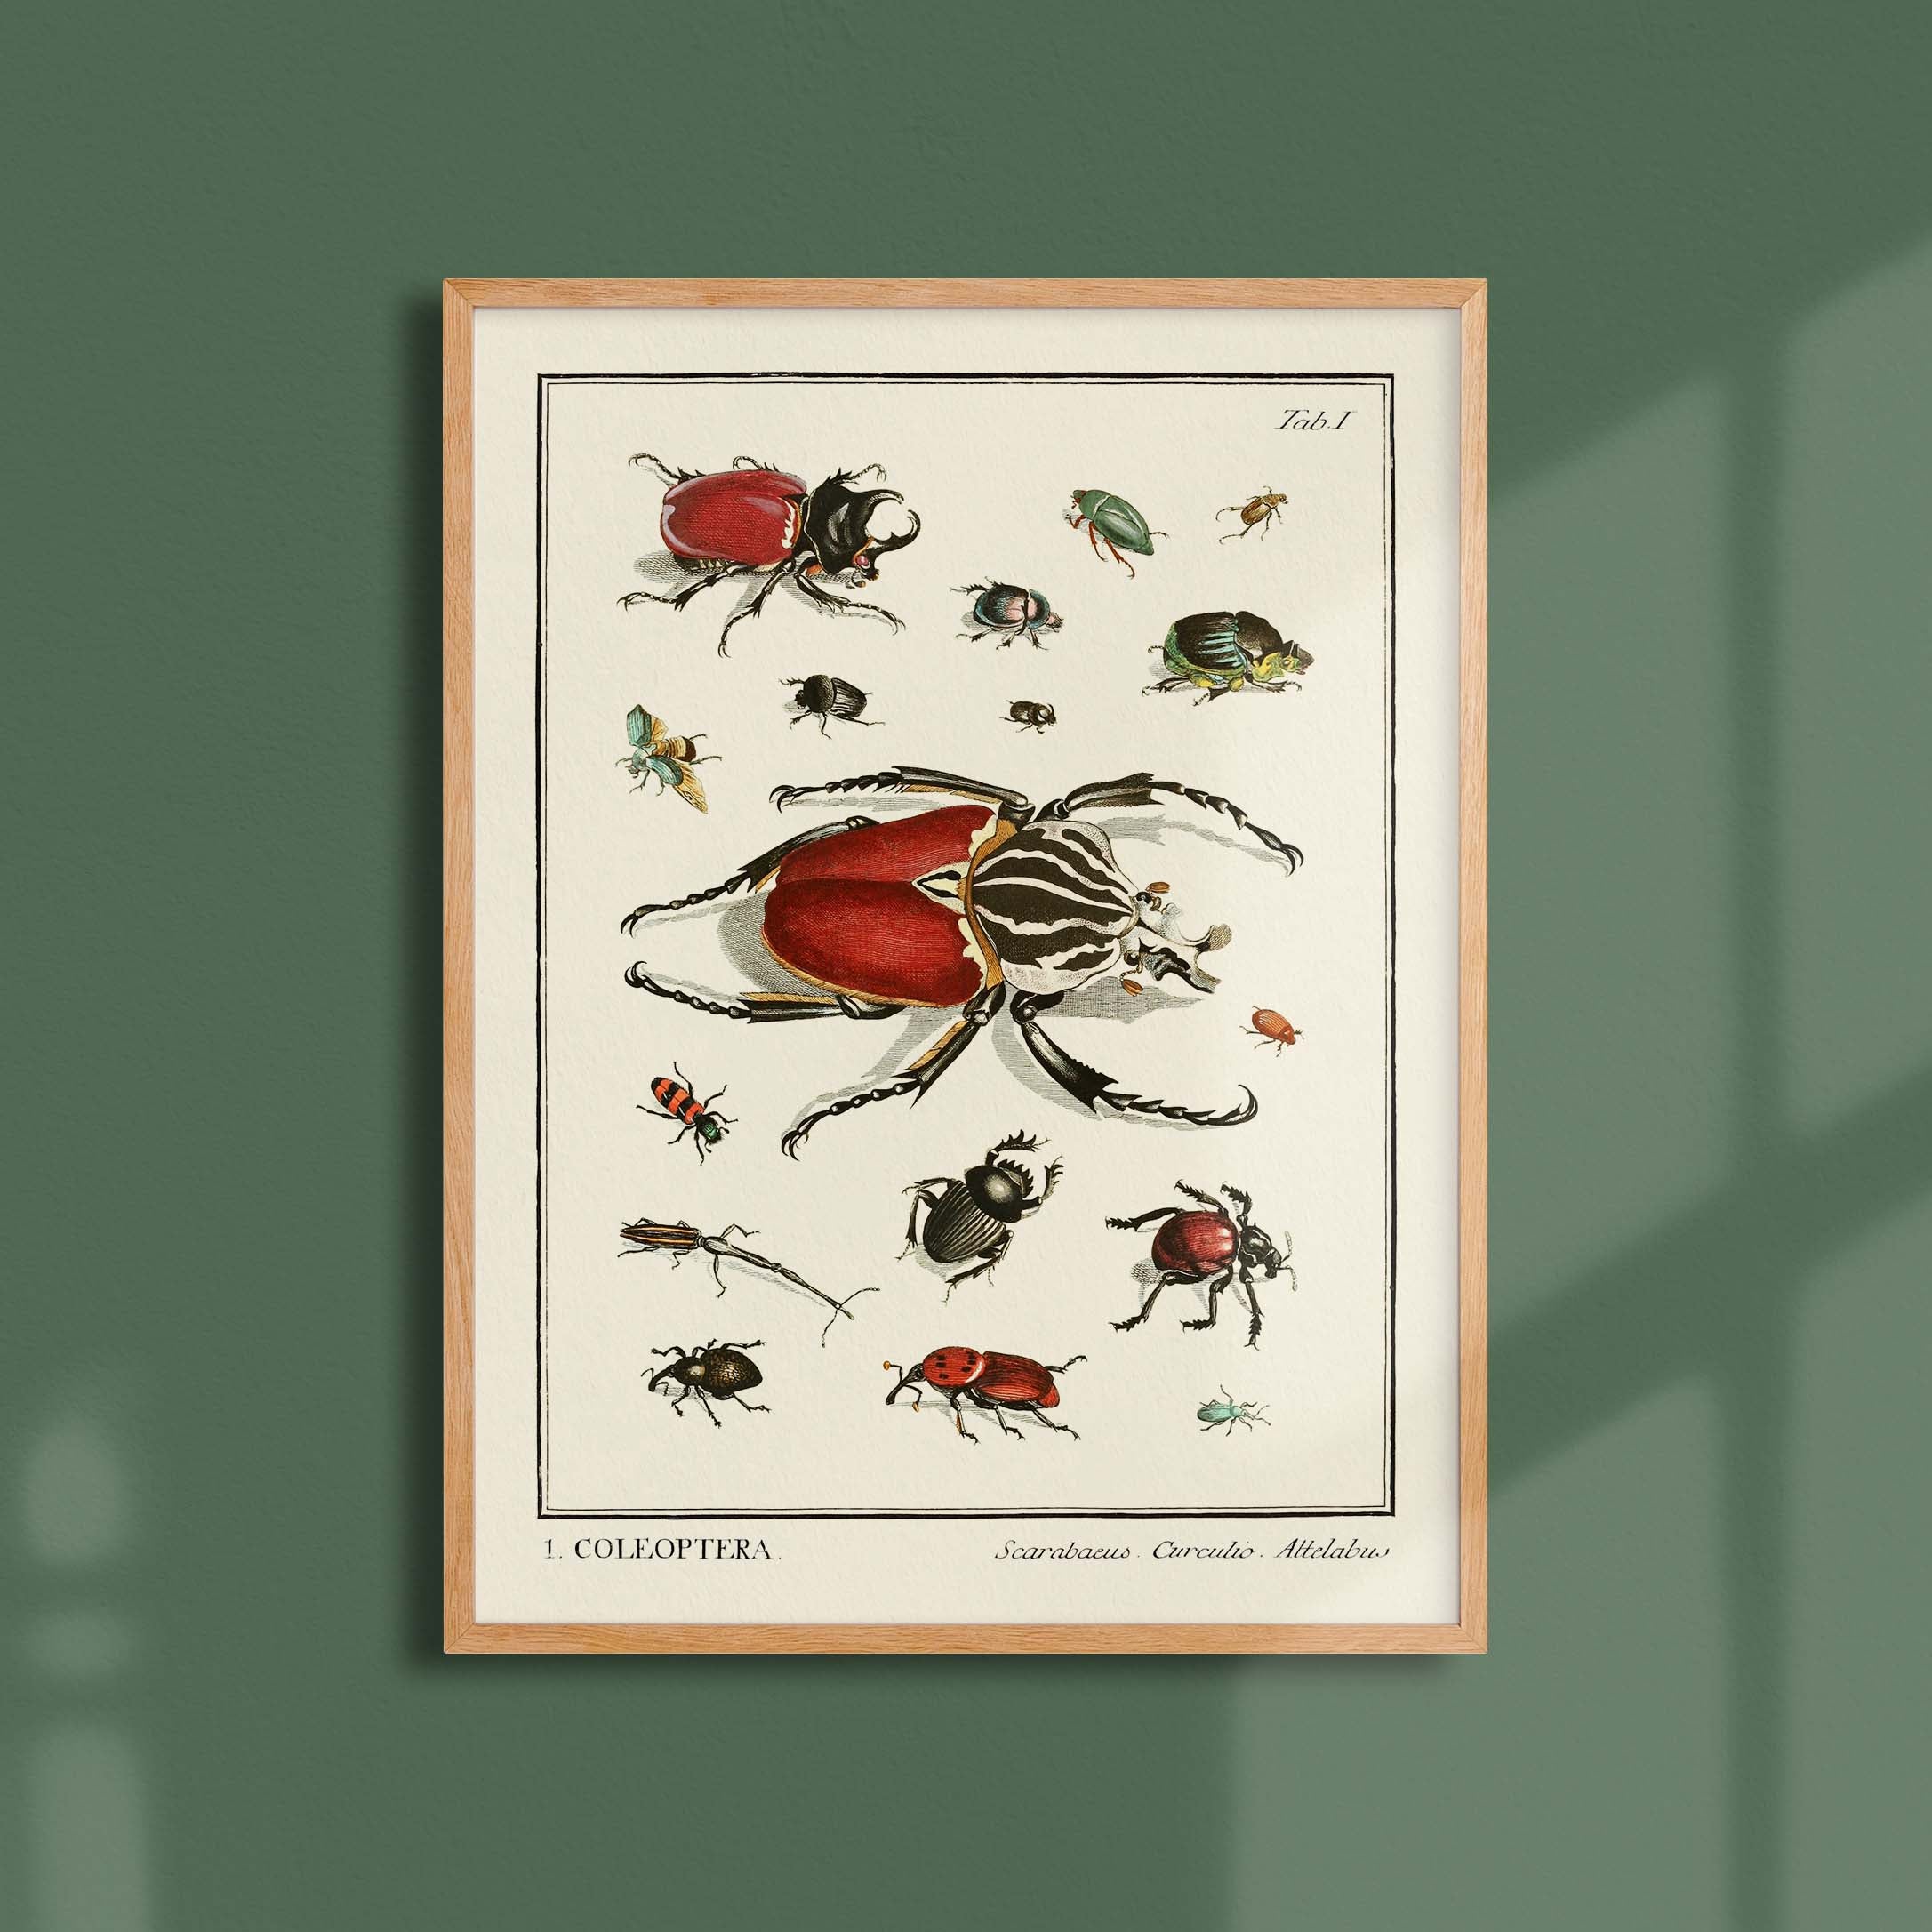 Planche d'entomologie - Coleoptera - 1-oneart.fr